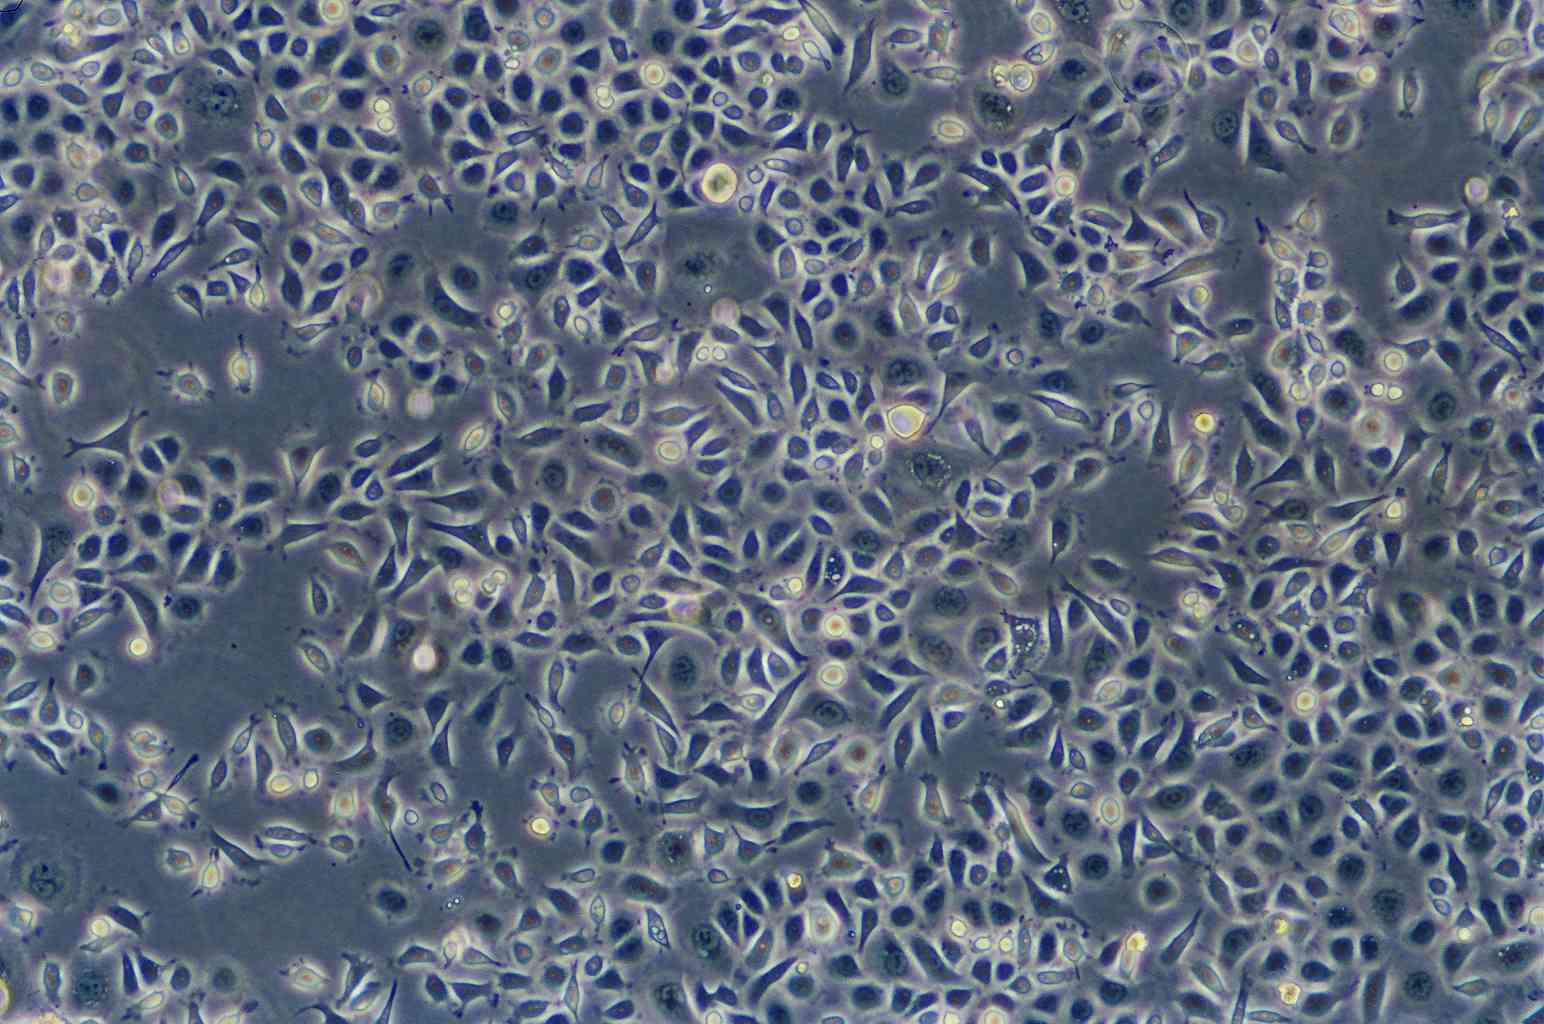 VCaP epithelioid cells人前列腺癌细胞系,VCaP epithelioid cells